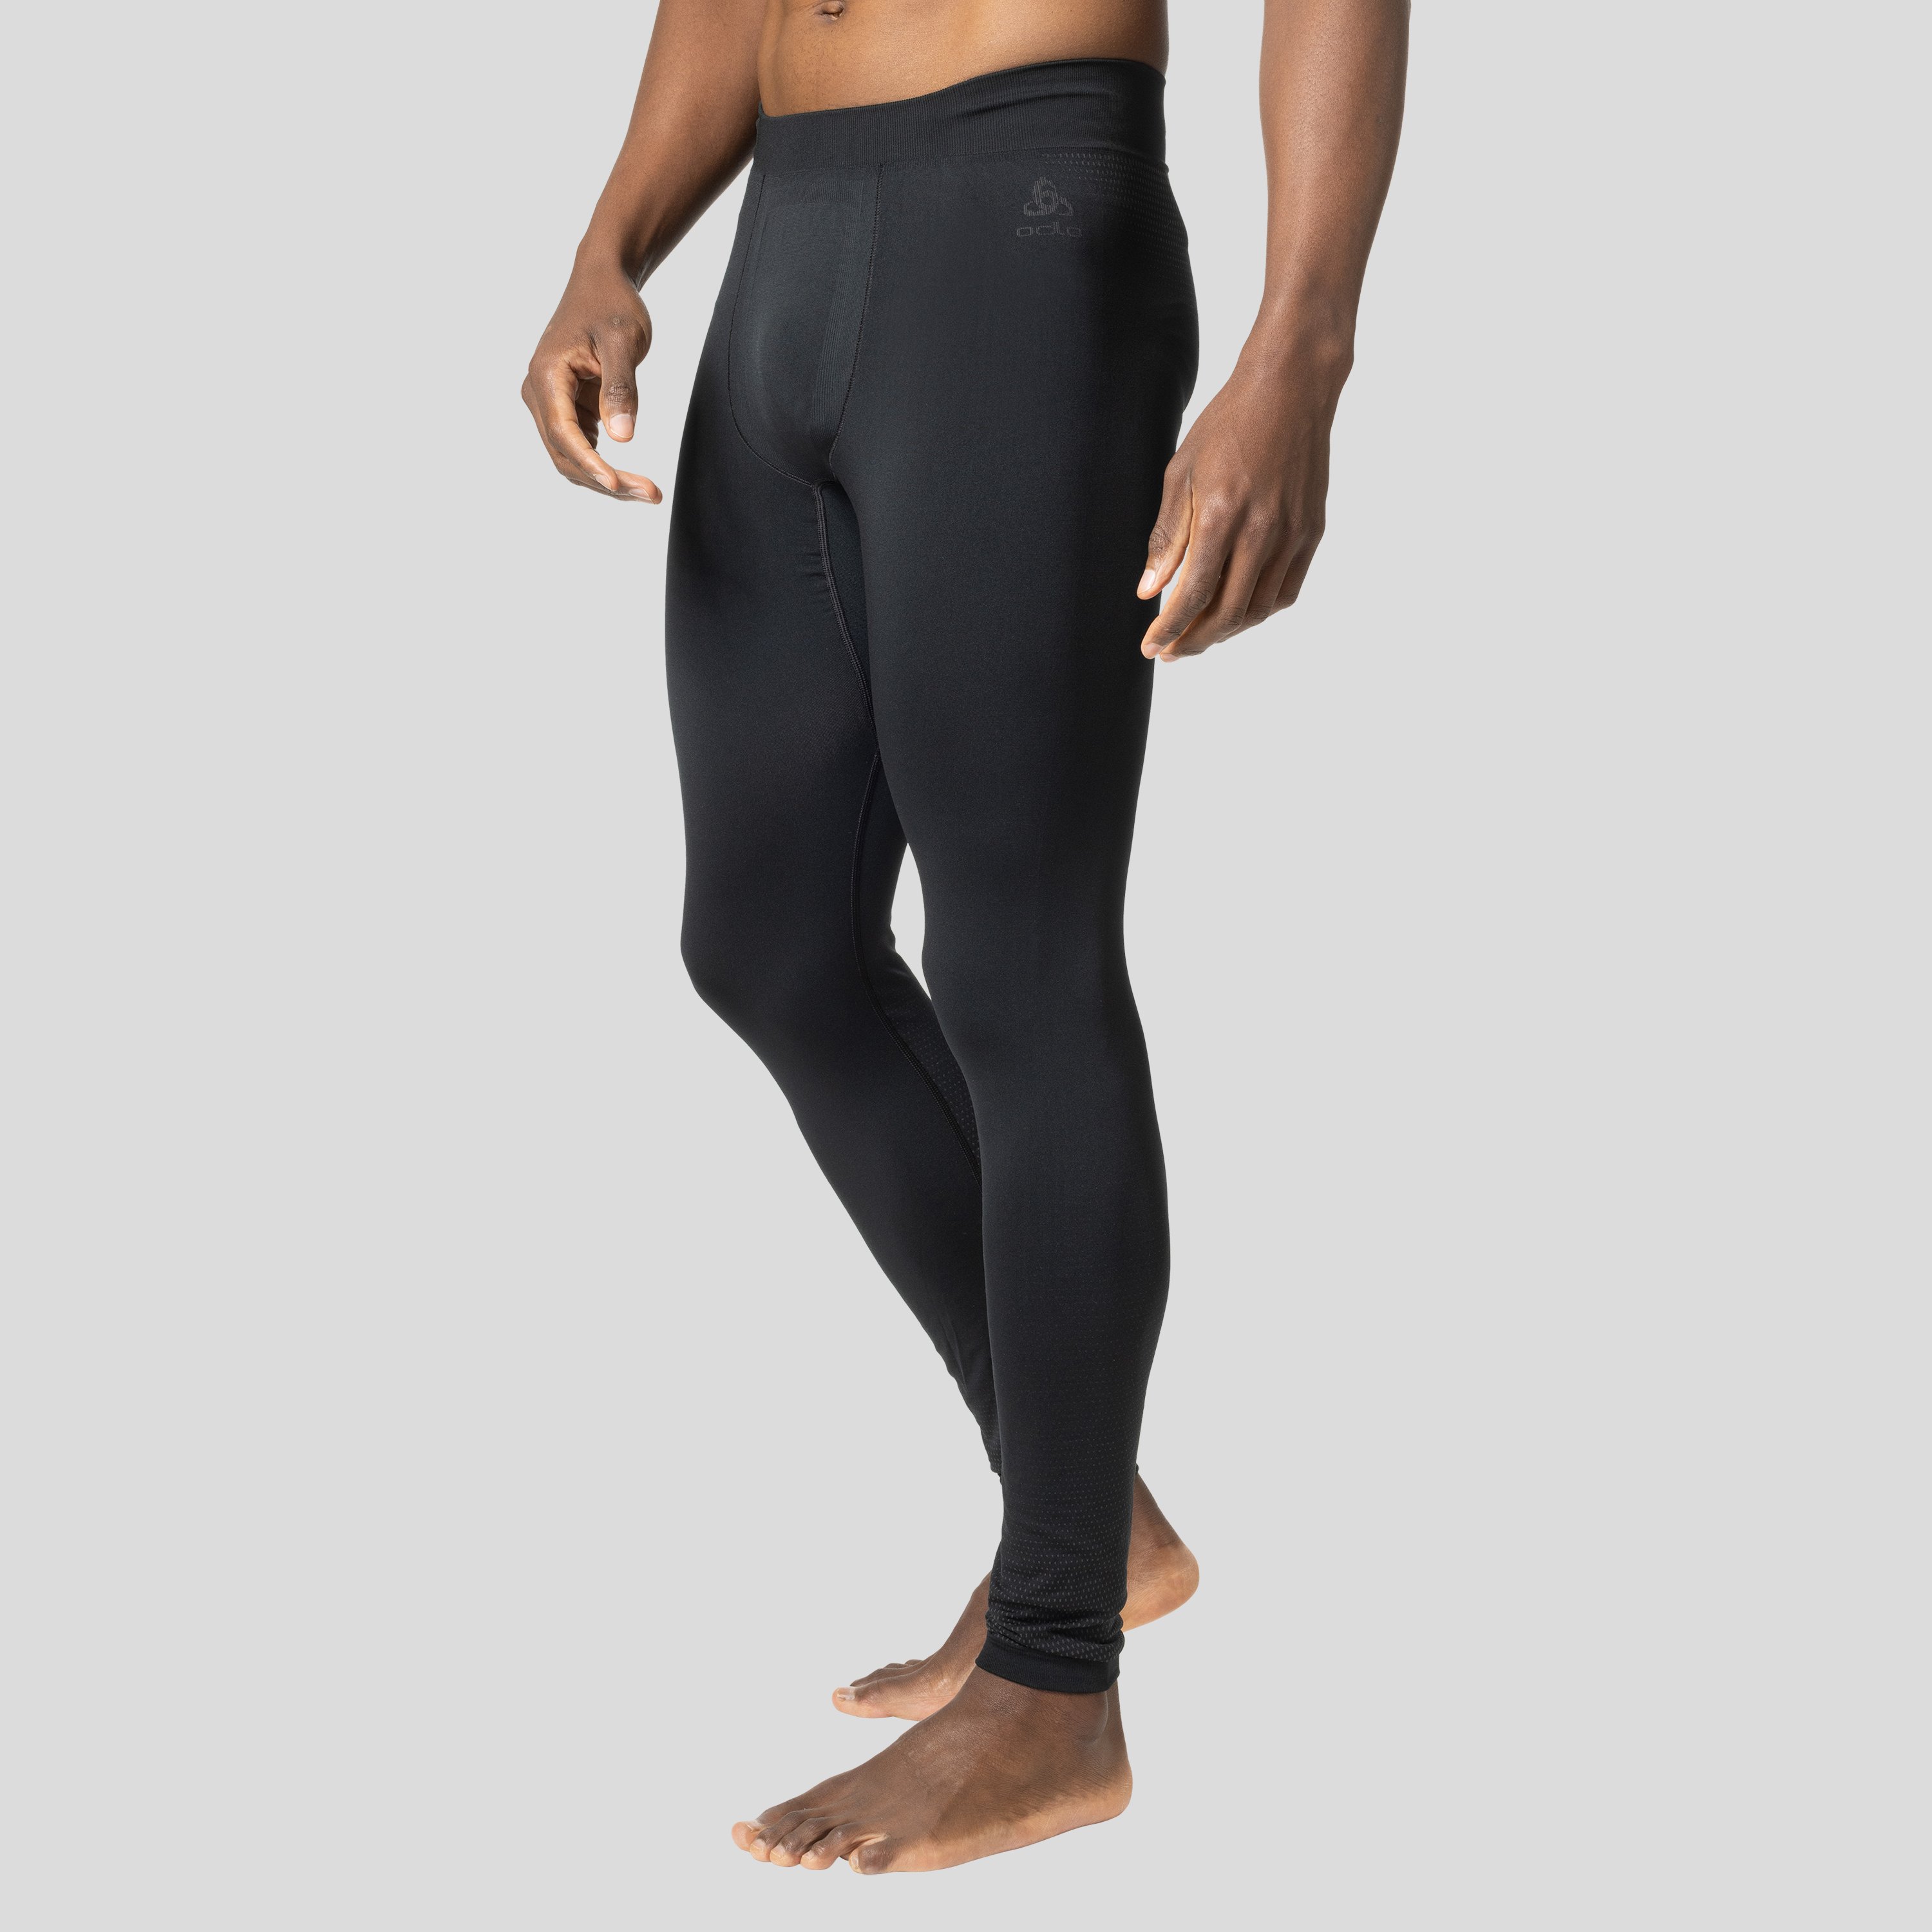 ODLO Performance Light Base-Layer-Pants für Herren, XL, schwarz